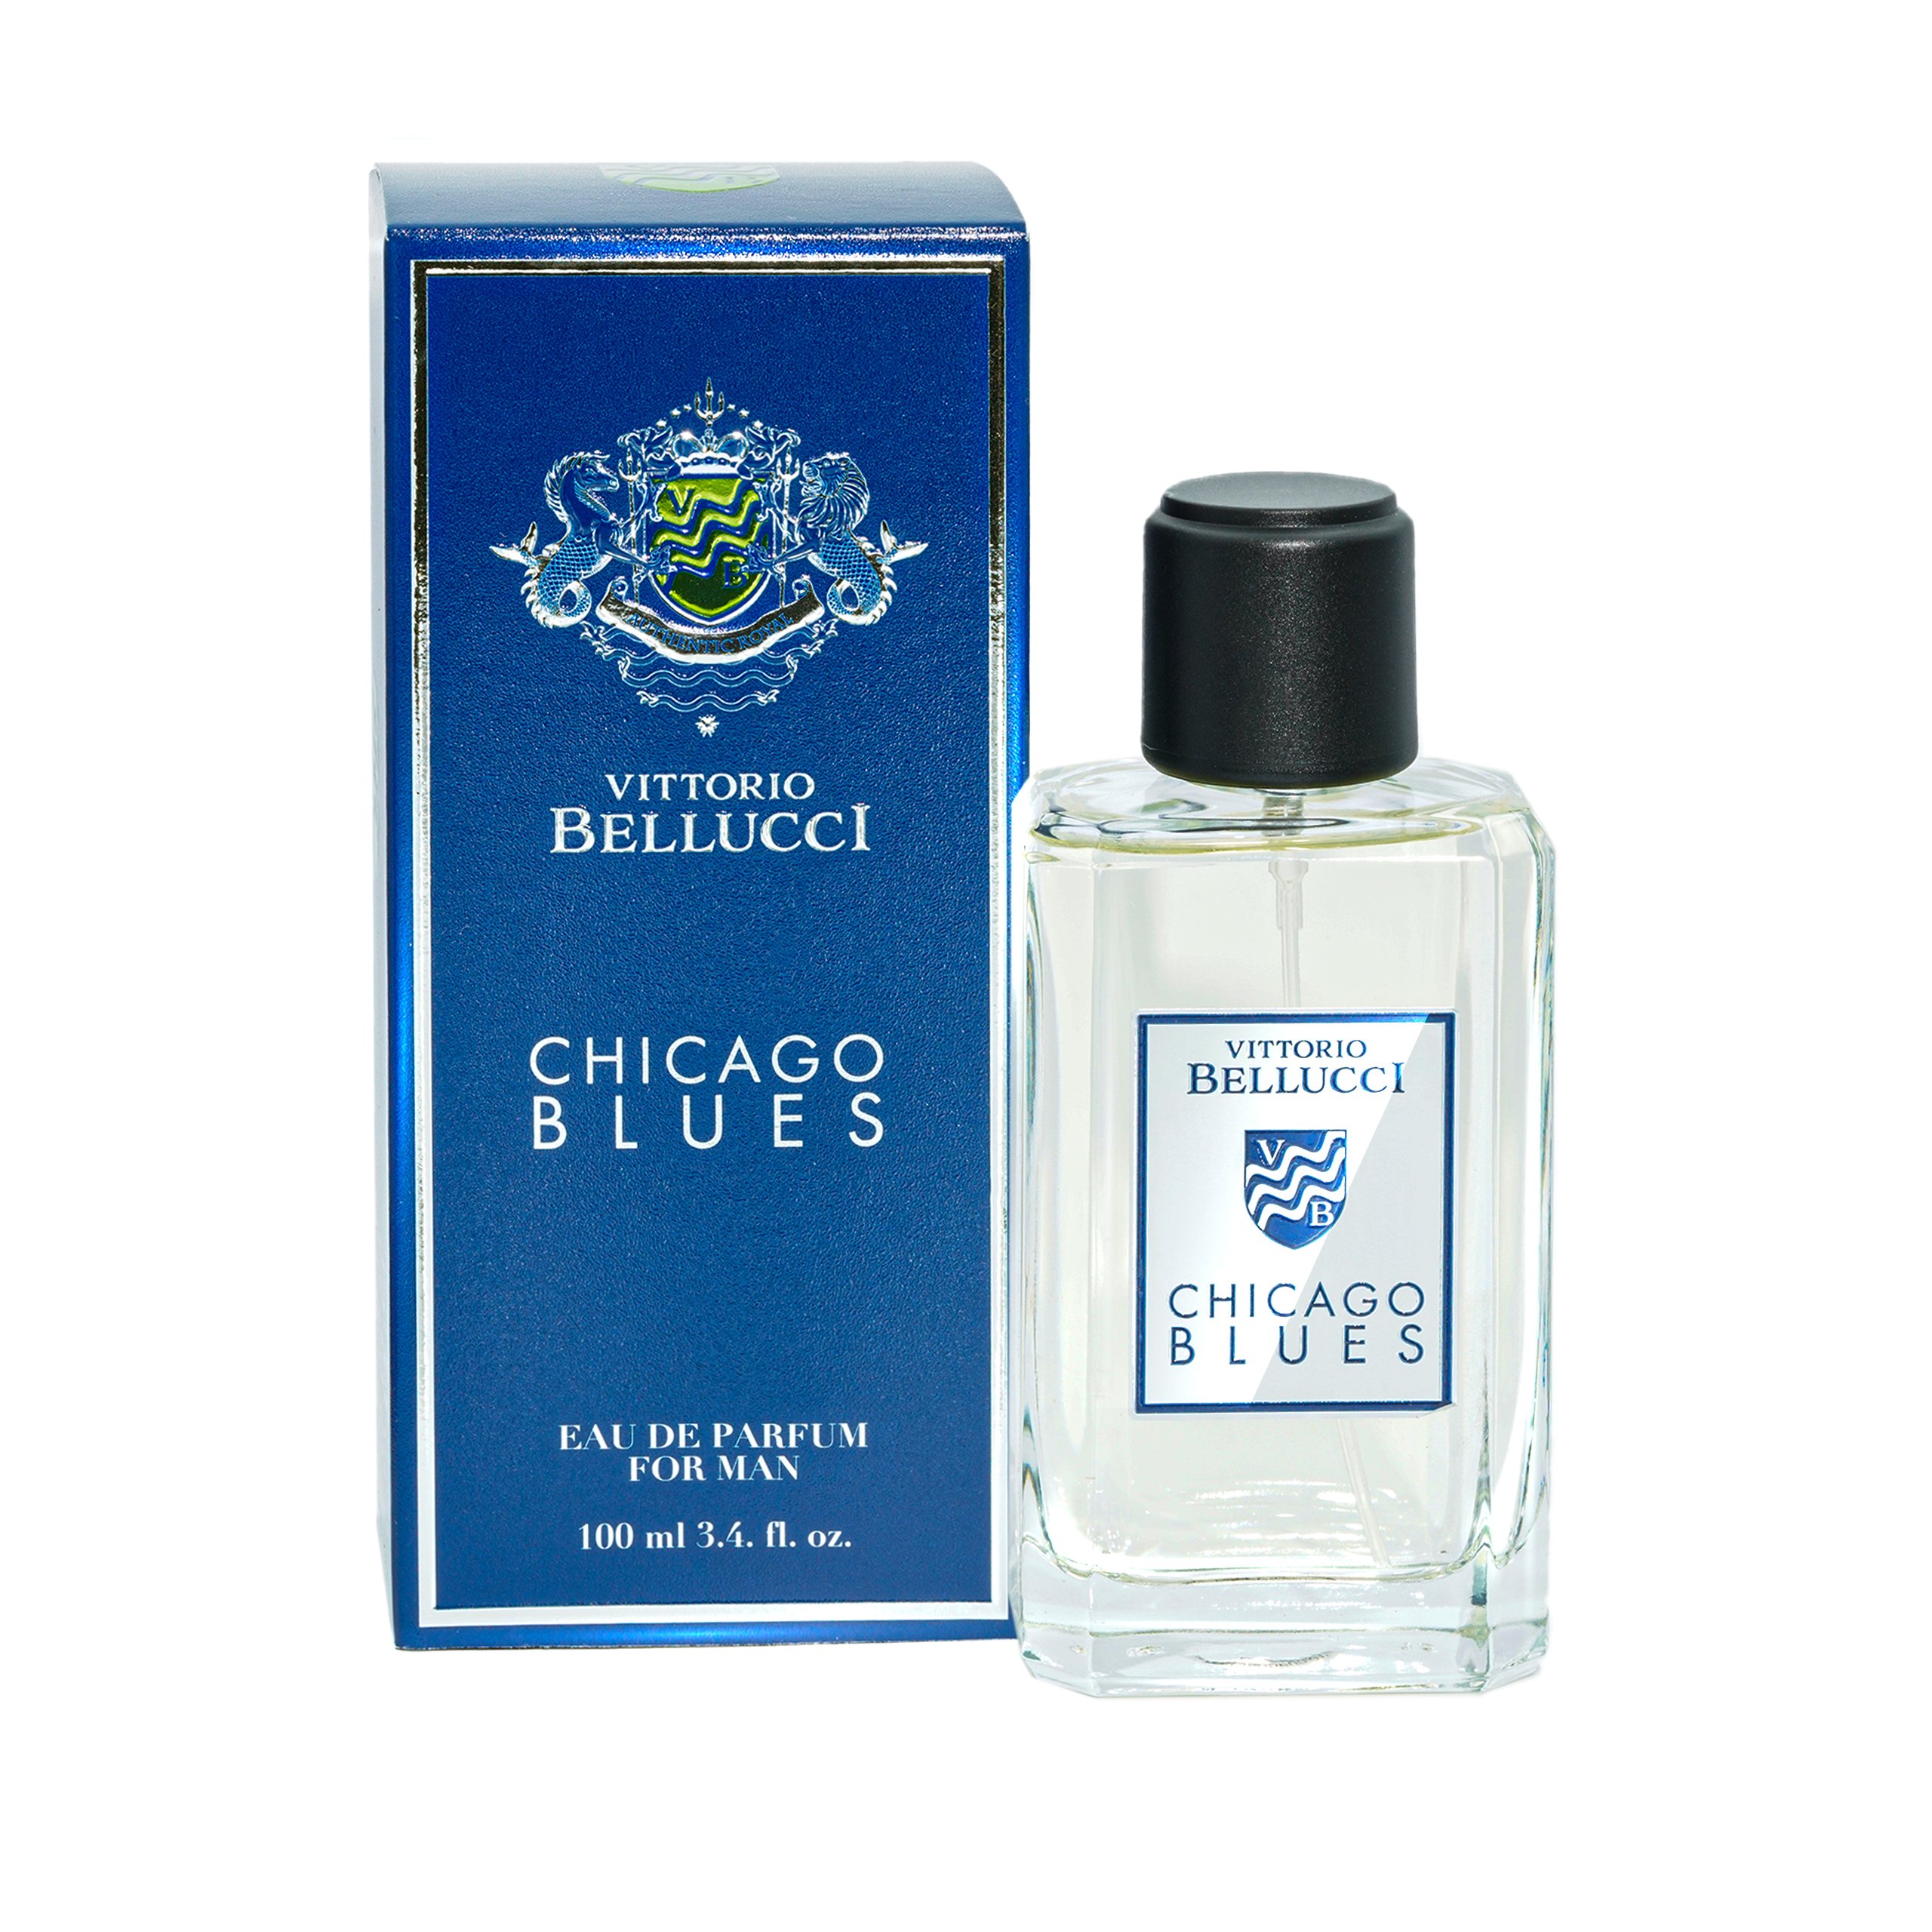 VITTORIO BELLUCCI EXCLUSIVE PERFUME CHICAGO BLUES